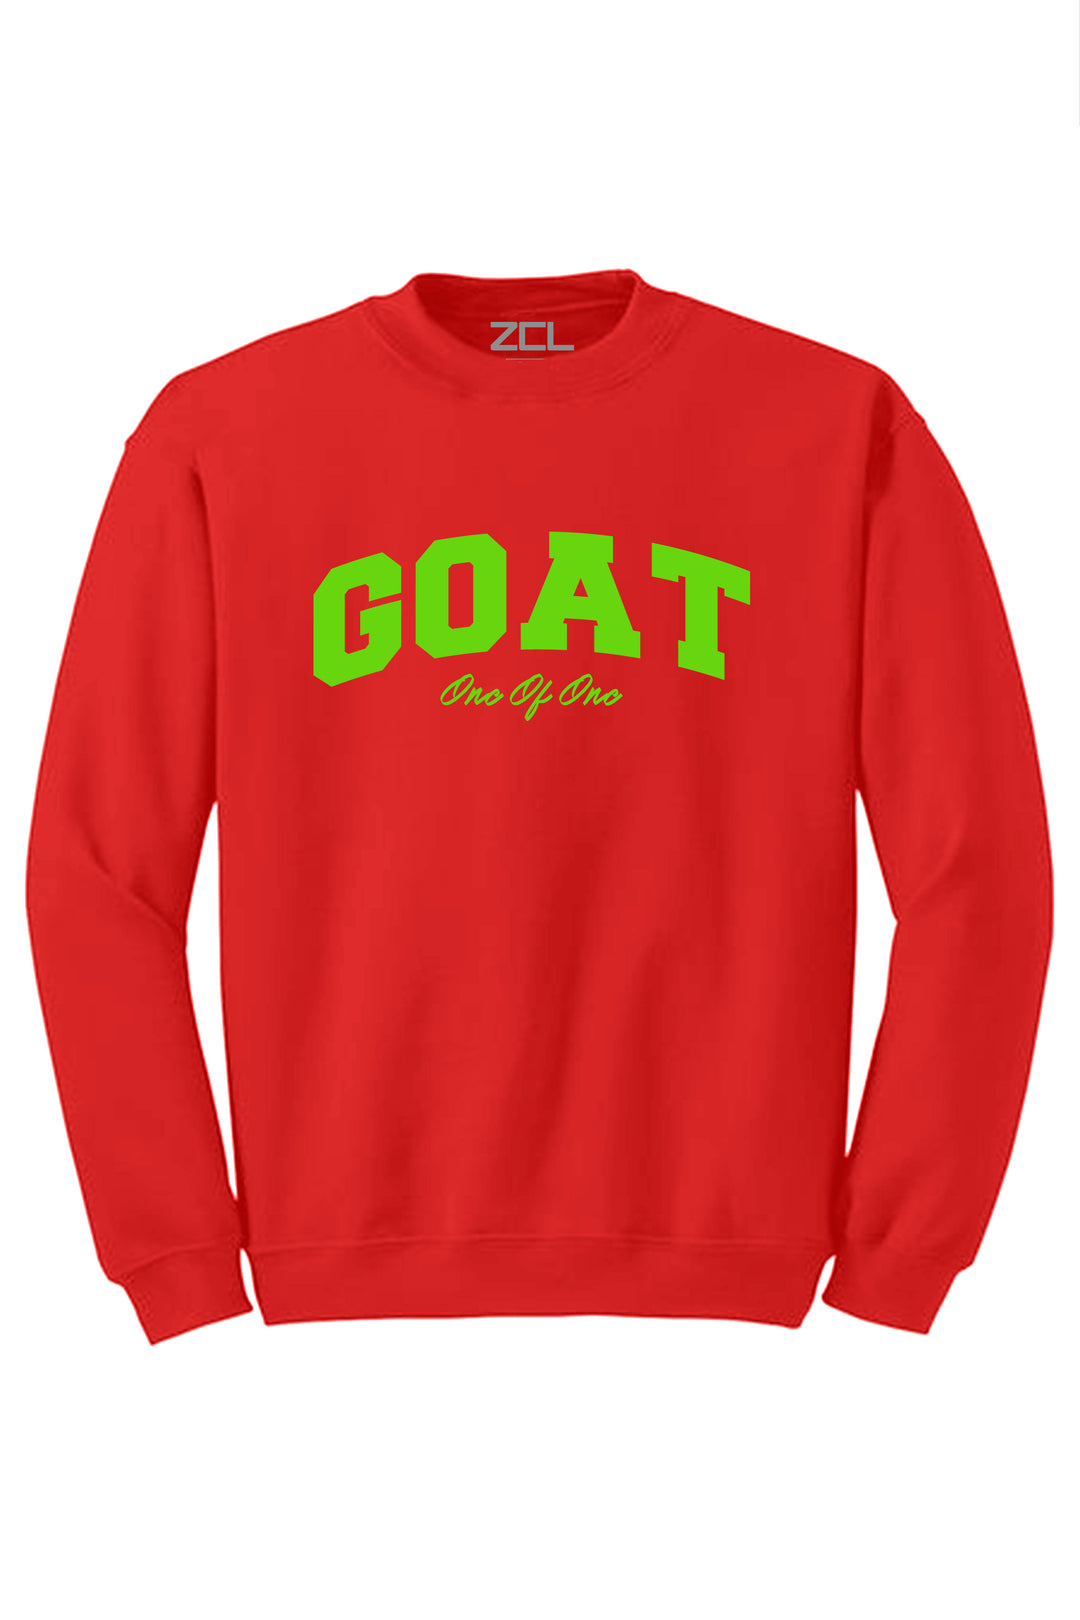 Goat Crewneck Sweatshirt (Lime Green Logo) - Zamage